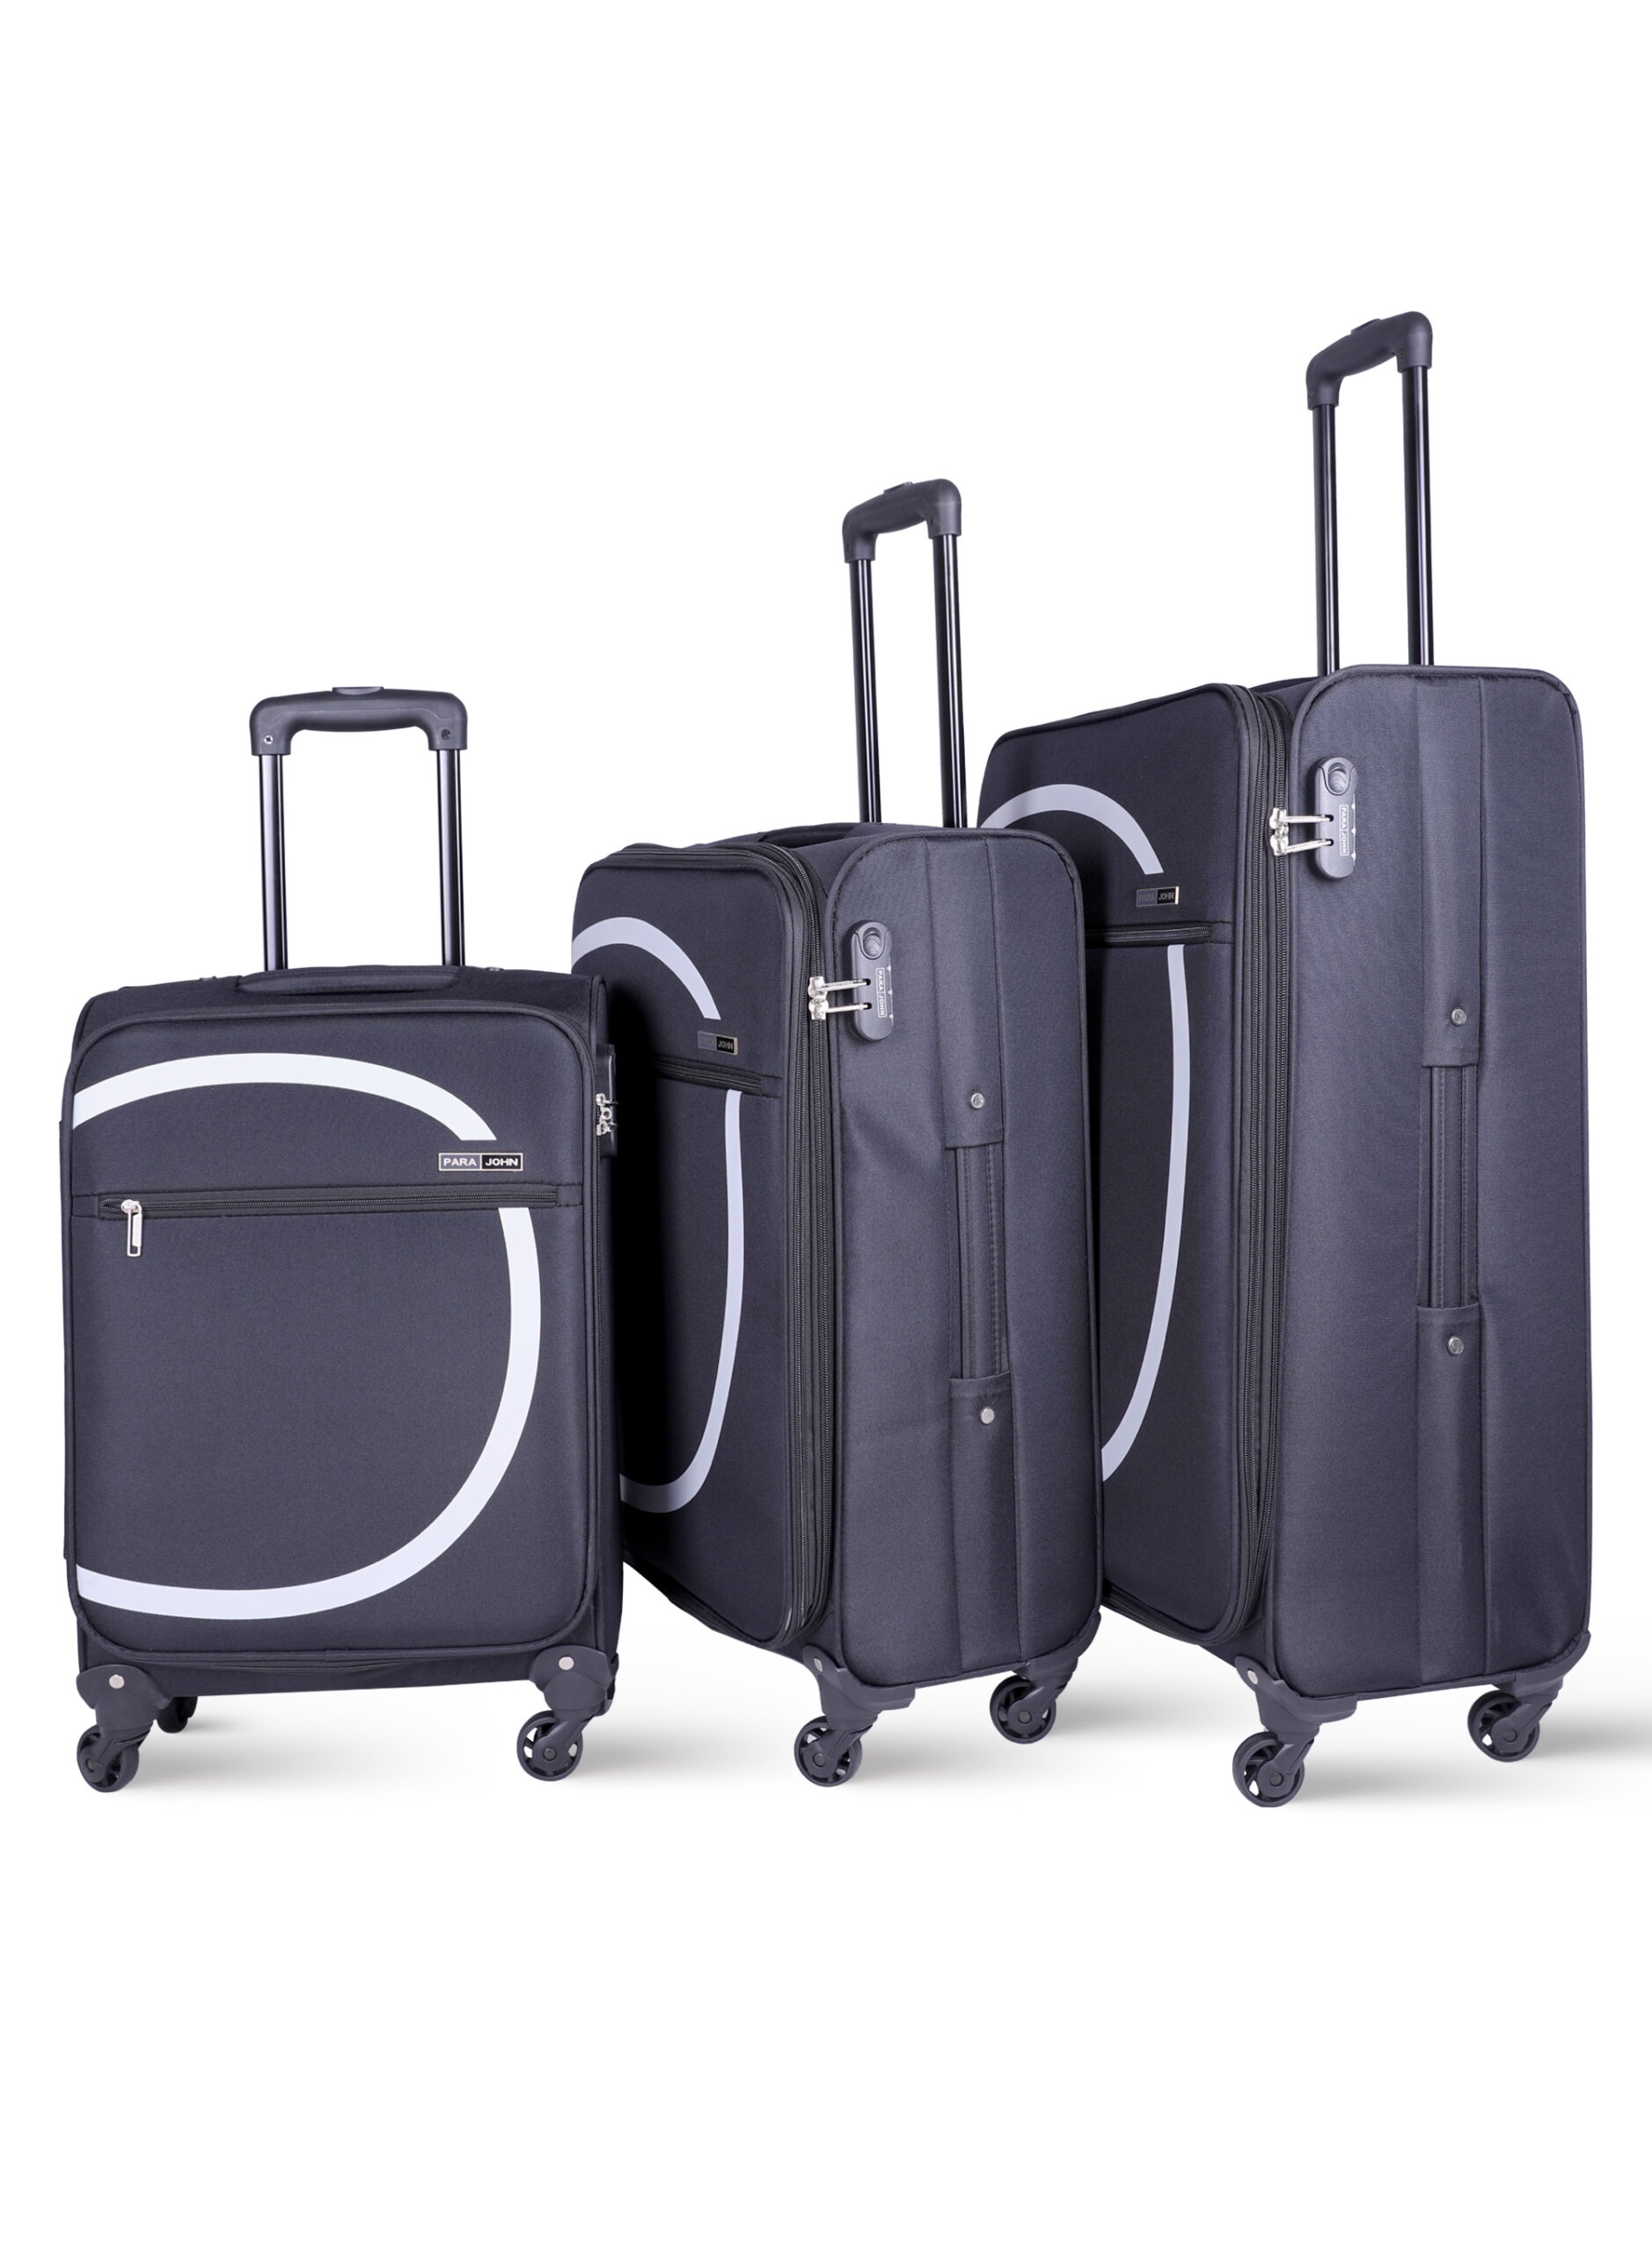 طقم حقائب سفر 3 حقائب مادة PP بعجلات دوارة (20 ، 24 ، 28) بوصة أسود PARA JOHN – Travel Luggage Suitcase, Set of 3 – Trolley Bag, Carry On Hand Cabin Luggage Bag